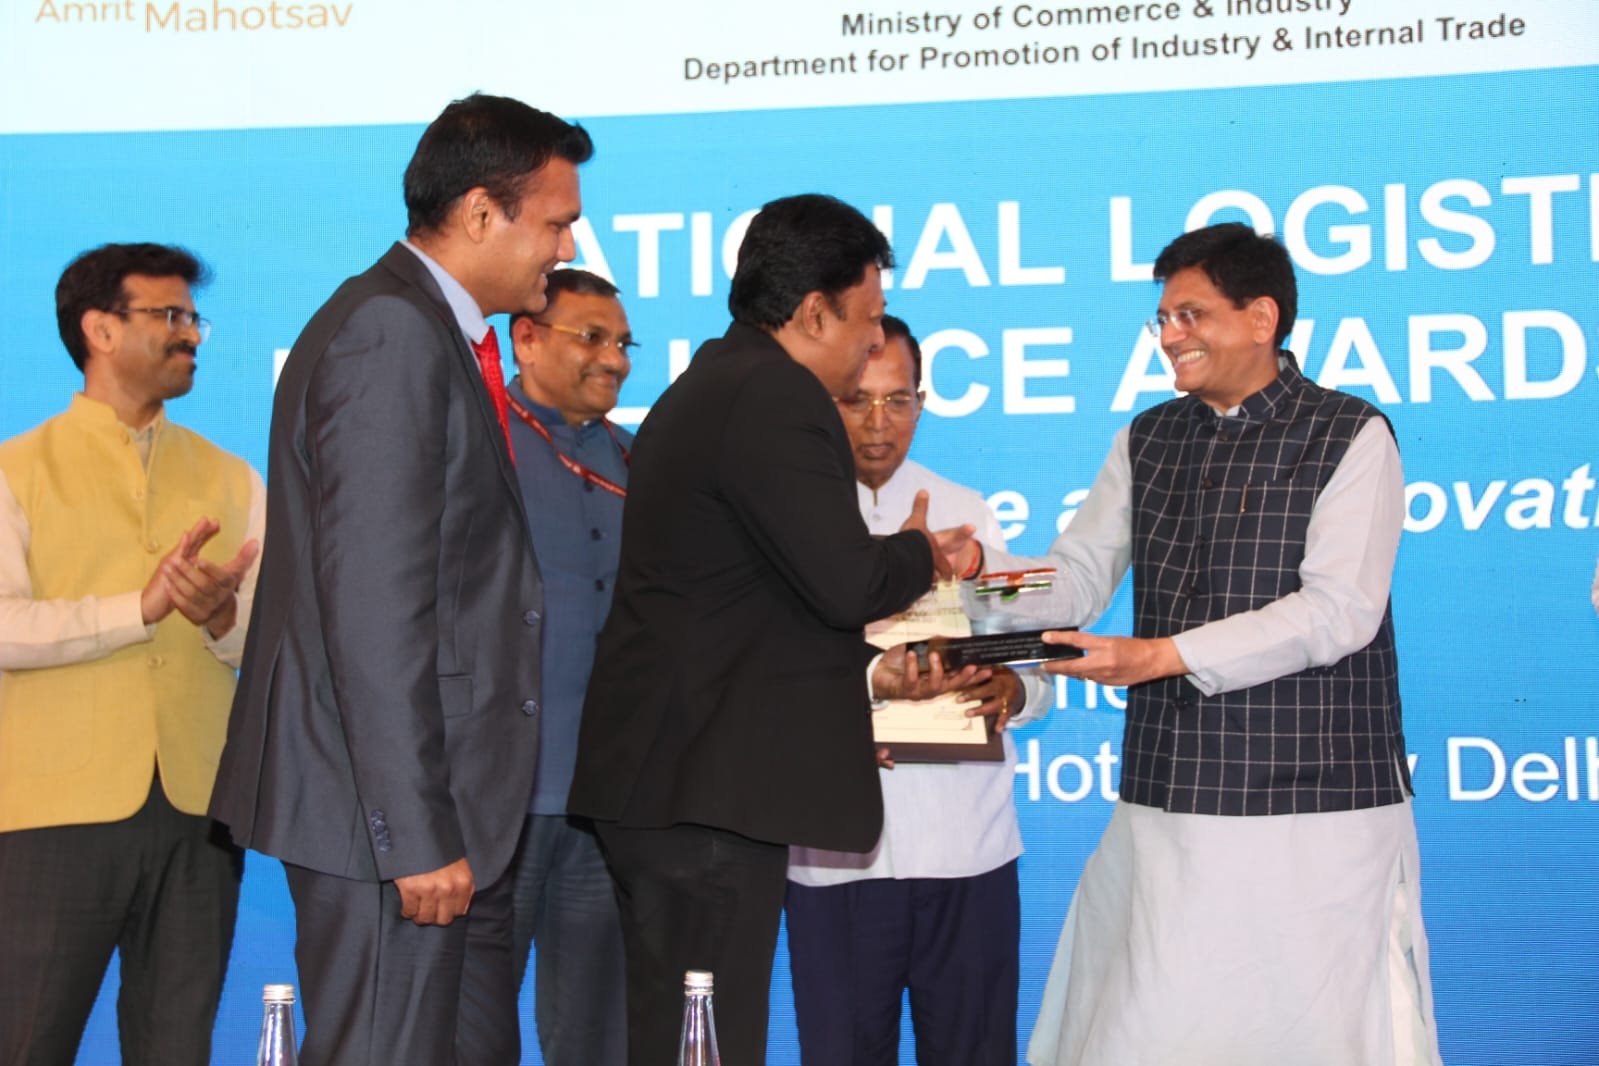 Mr Jibu Itty receiving award from Shri Piyush Goyal